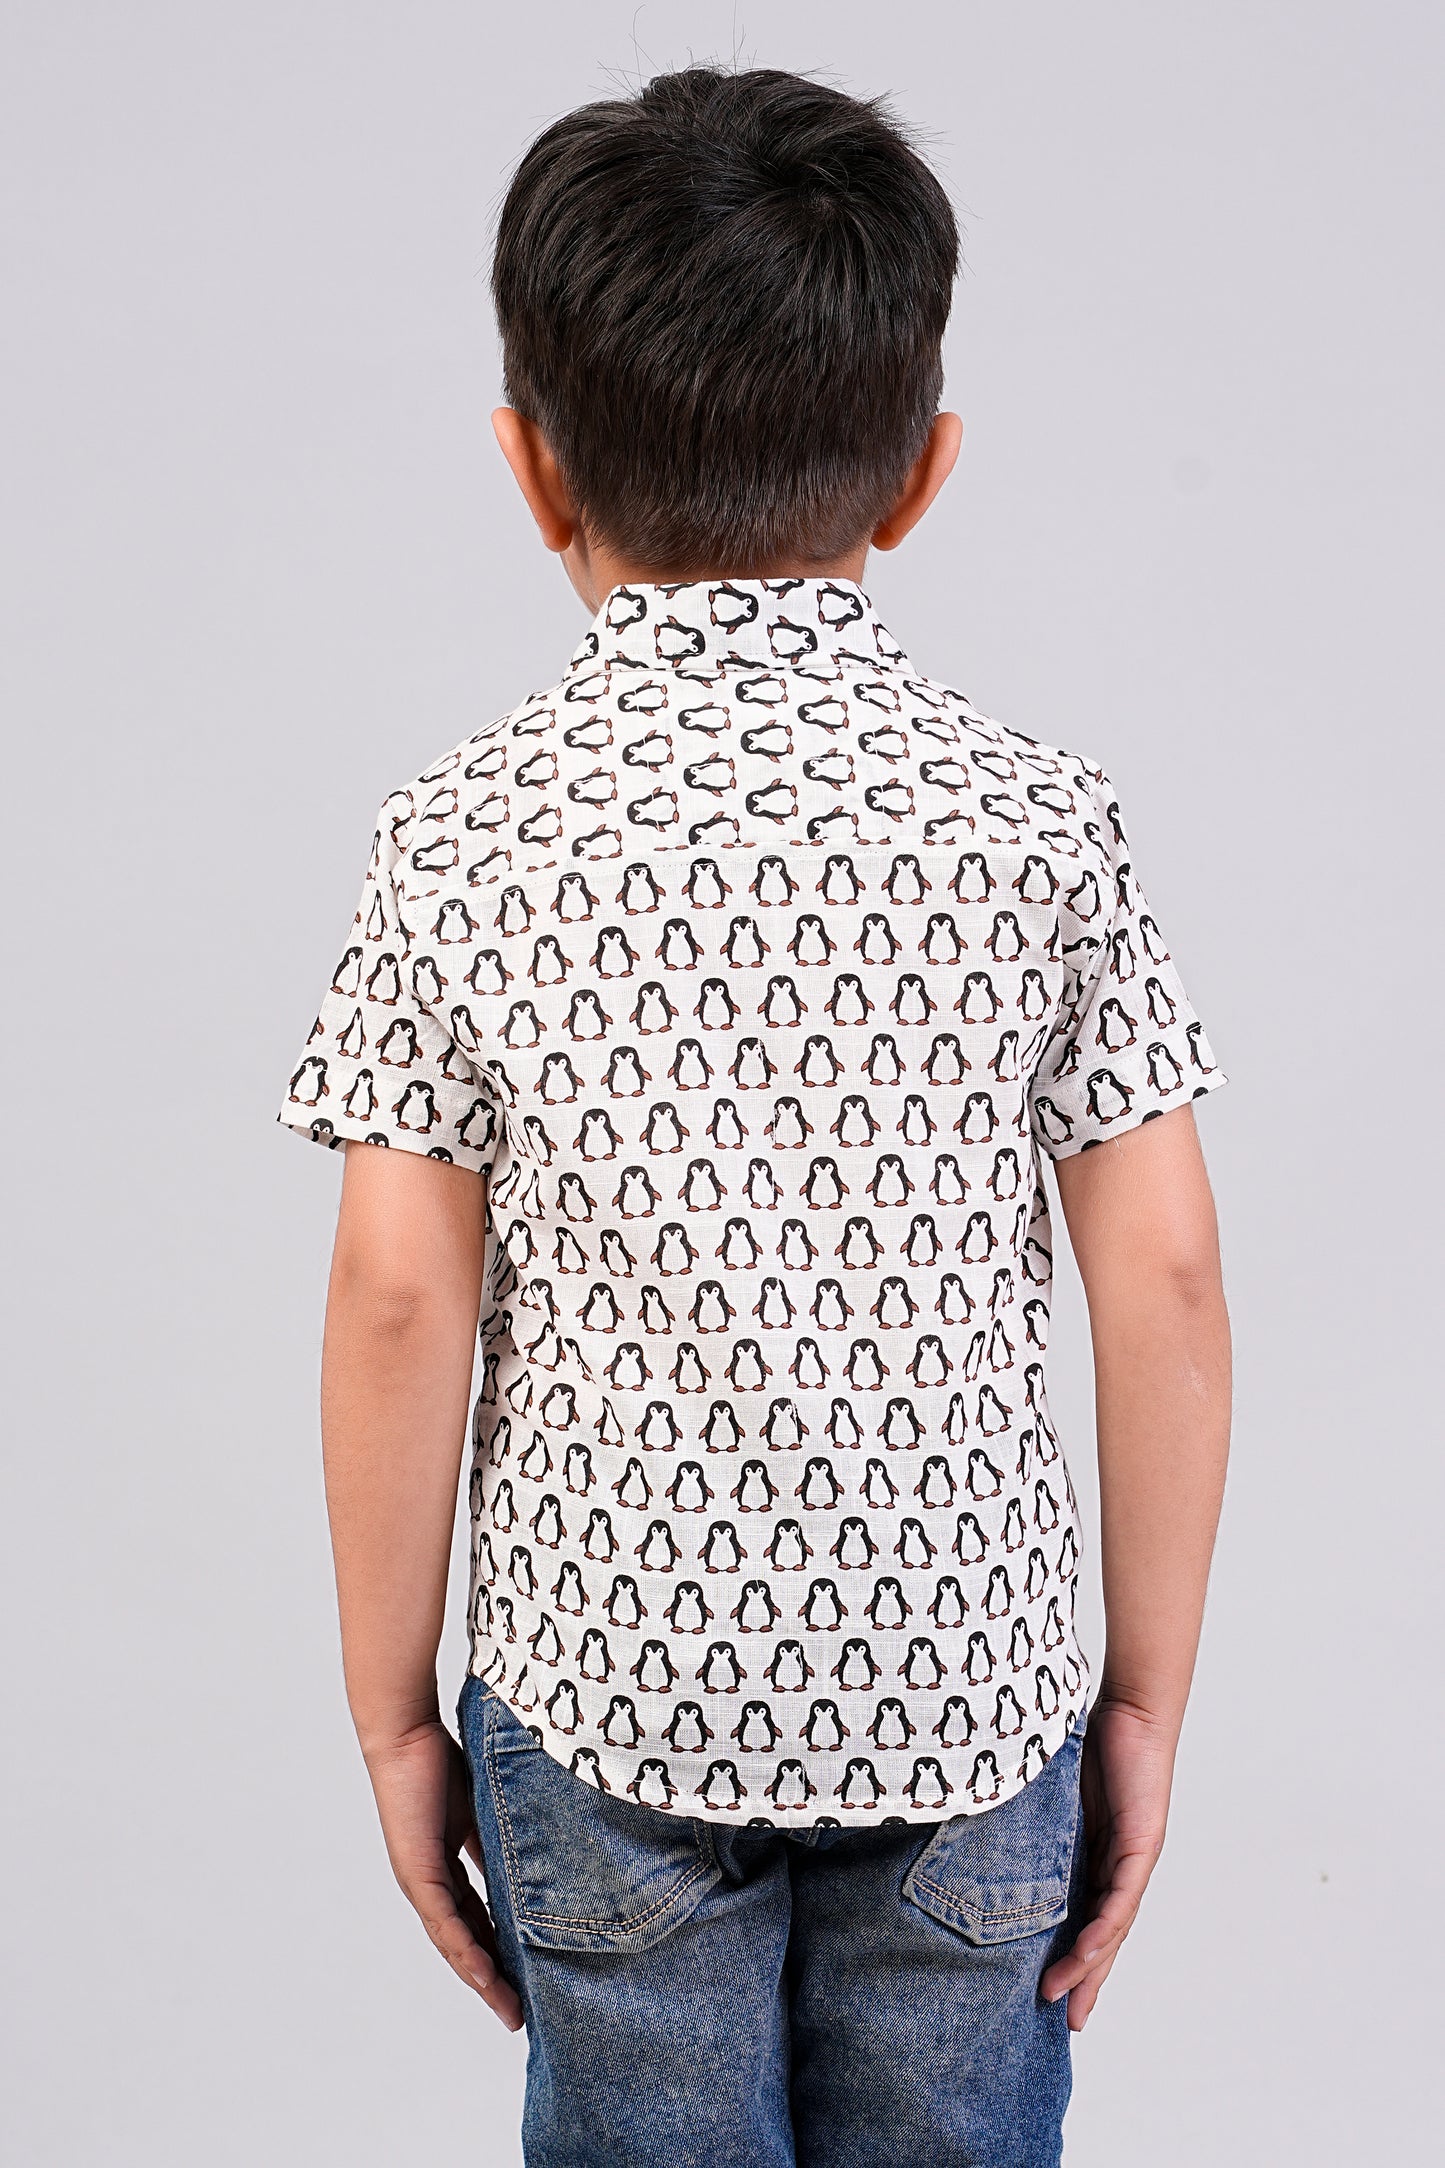 Boy's Penguin Printed Half-Sleeves Shirts